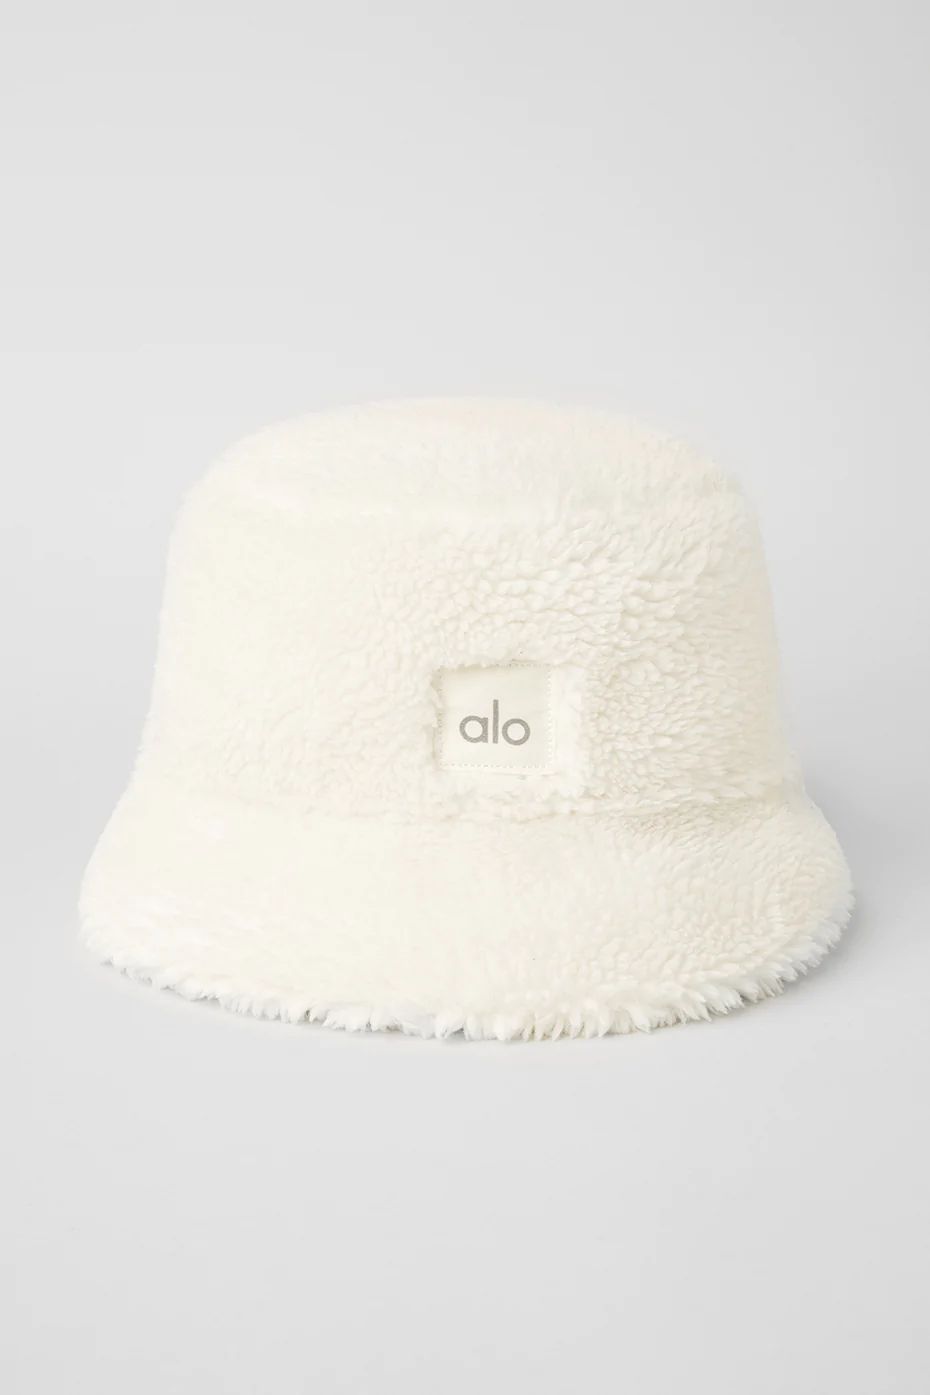 Alo YogaÅ½ | Foxy Sherpa Bucket Hat Jacket in Ivory, Size: Small/Medium | Alo Yoga